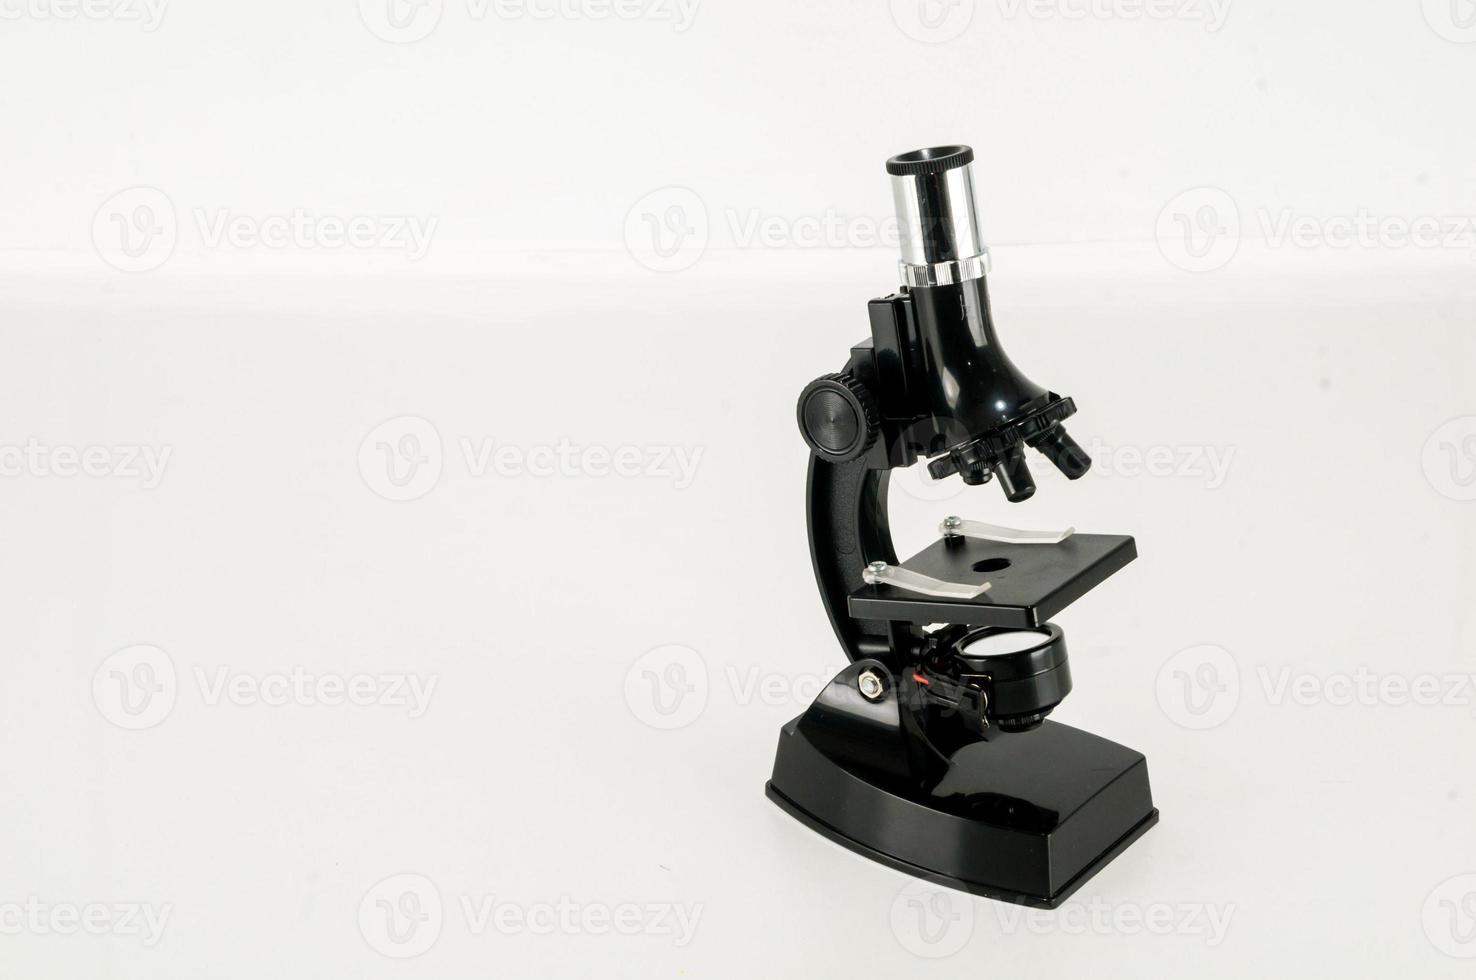 mikroskop på vit foto